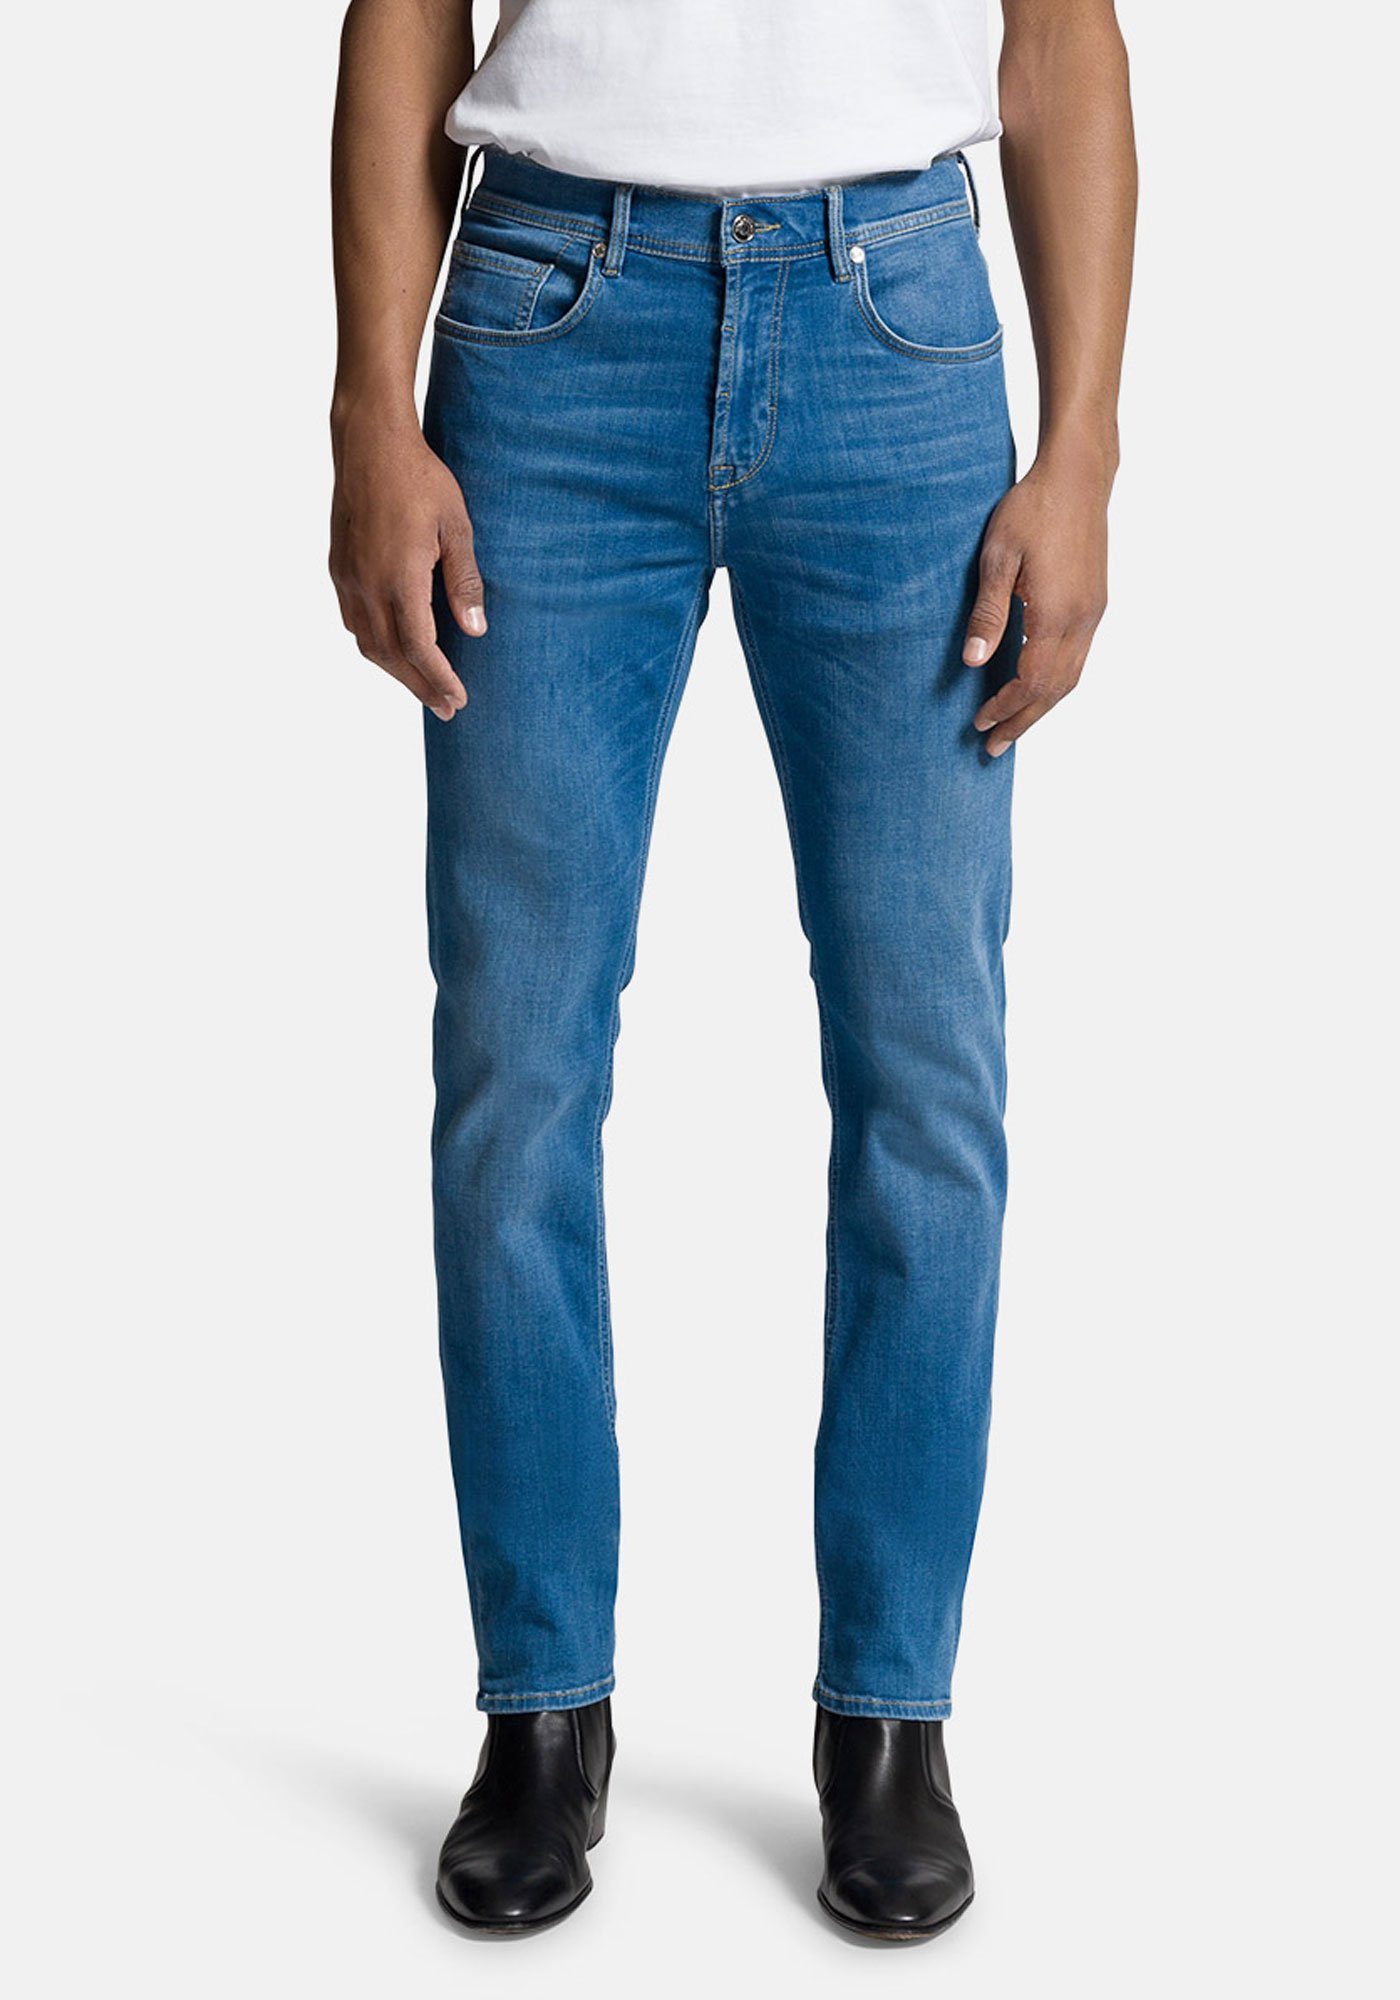 BALDESSARINI 5-Pocket-Jeans Jack Tribute To Nature sky blue used mustache